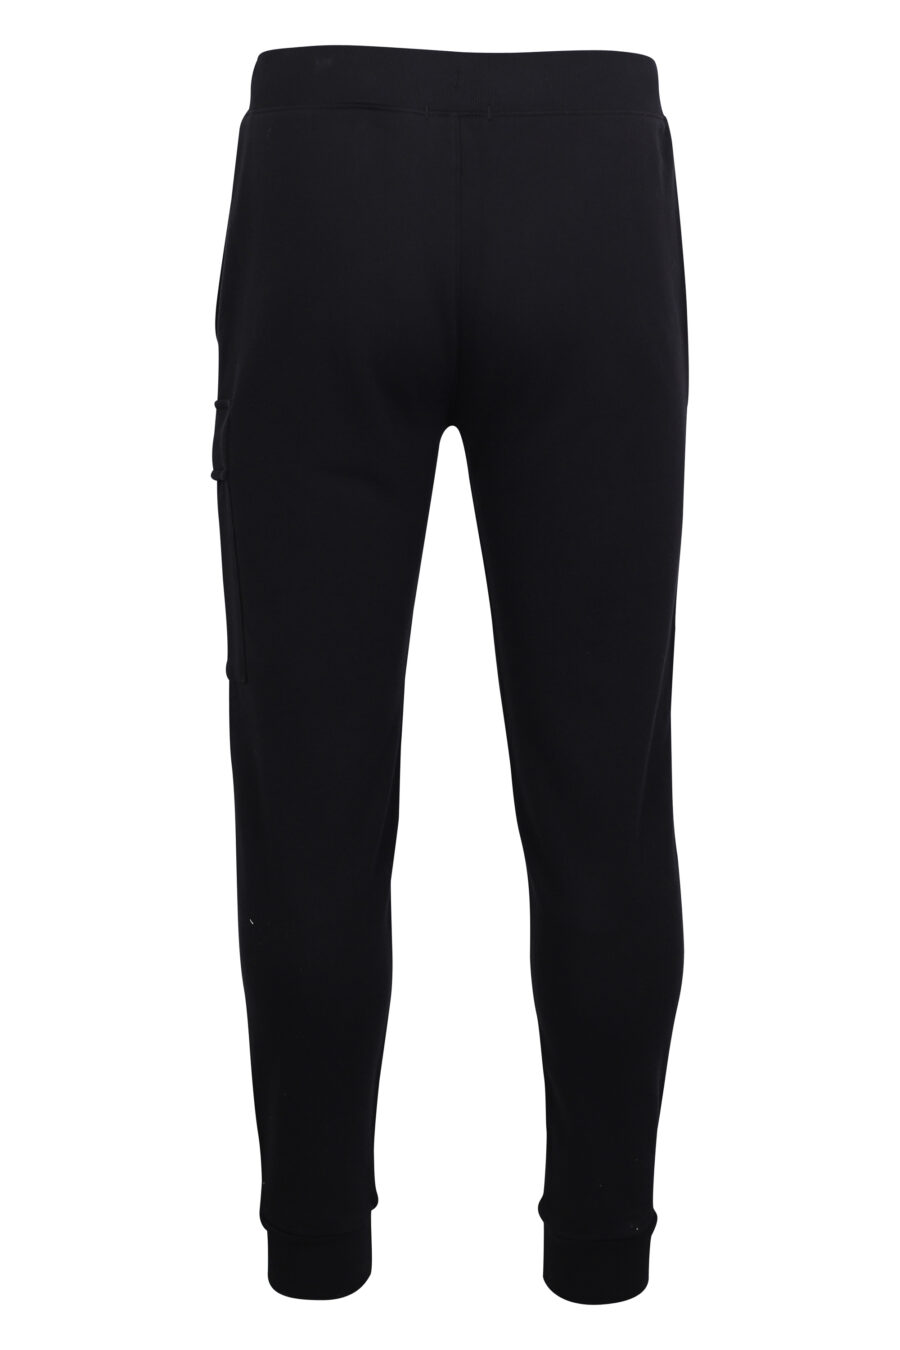 Pantalon cargo noir avec poches diagonales et mini-logo circulaire - IMG 2474